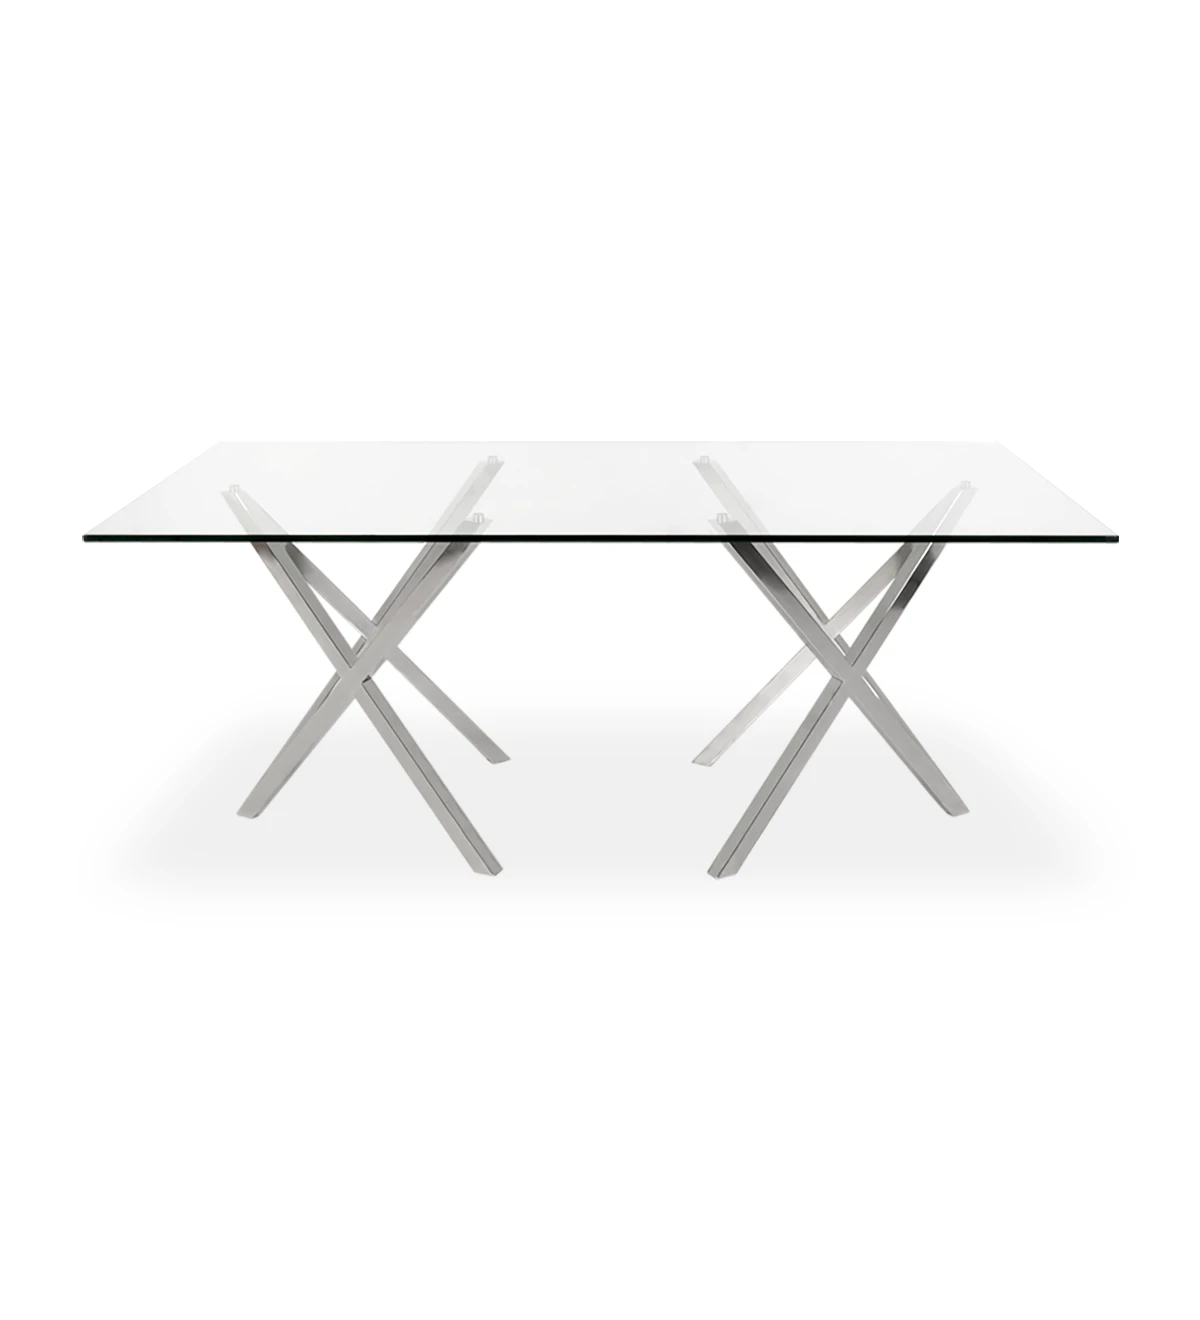 Paris rectangular dining table 200 x 98 cm, glass top, stainless steel feet.